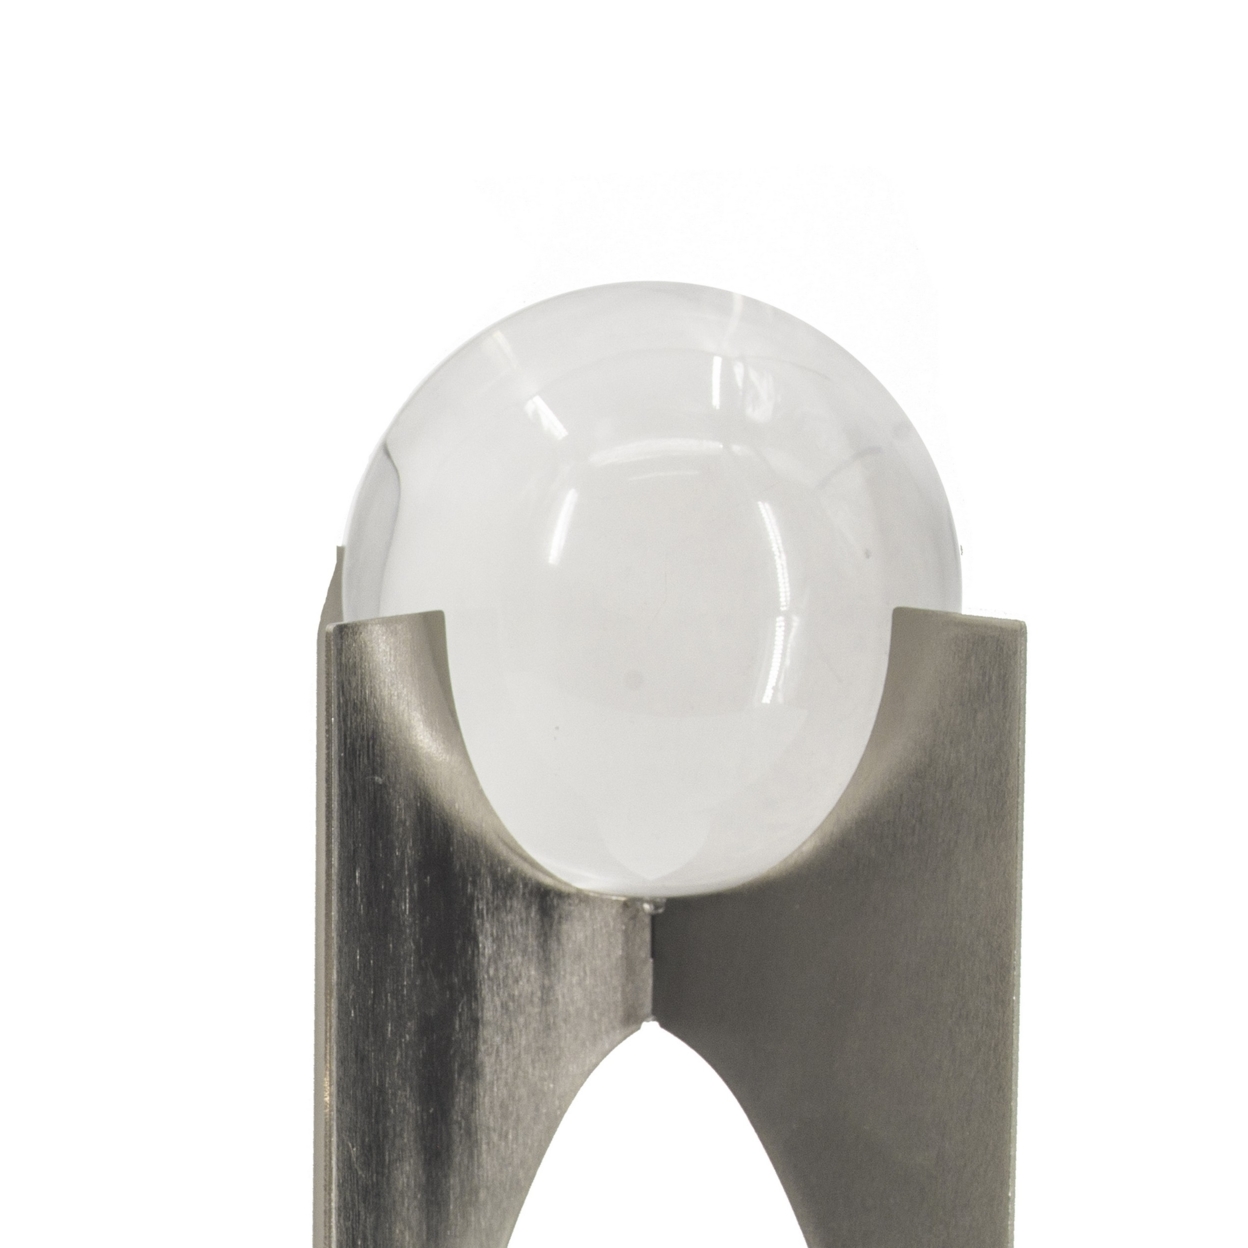 13, 10 Inch Crystal Orb Accent Decor Set Of 2, Metal Stand, Art Deco- Saltoro Sherpi